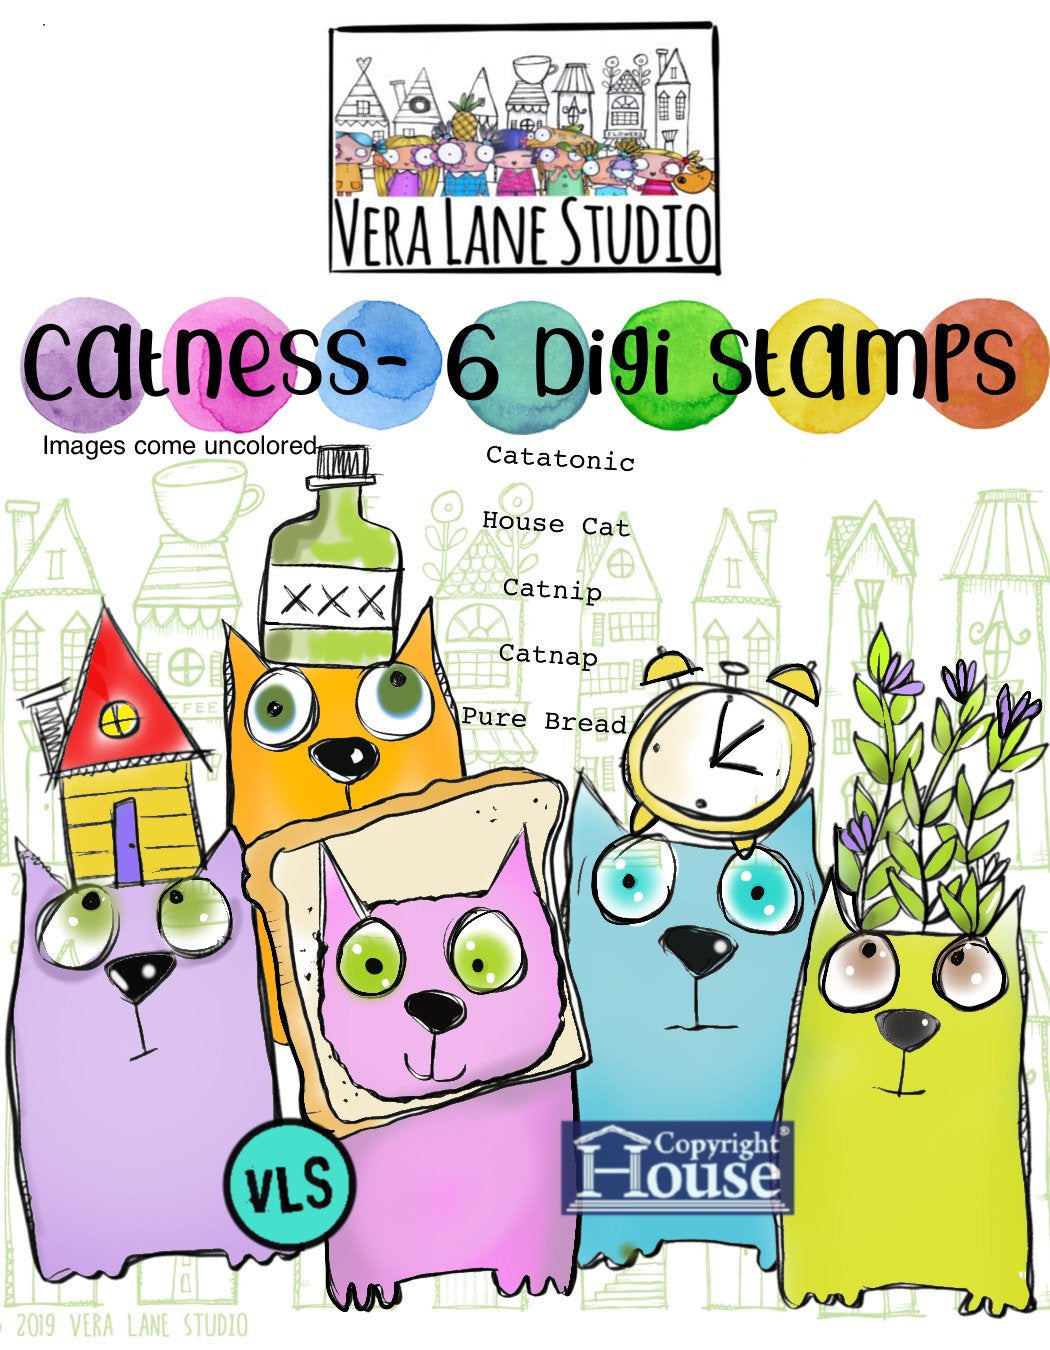 Catness - 5 digi stamp bundle